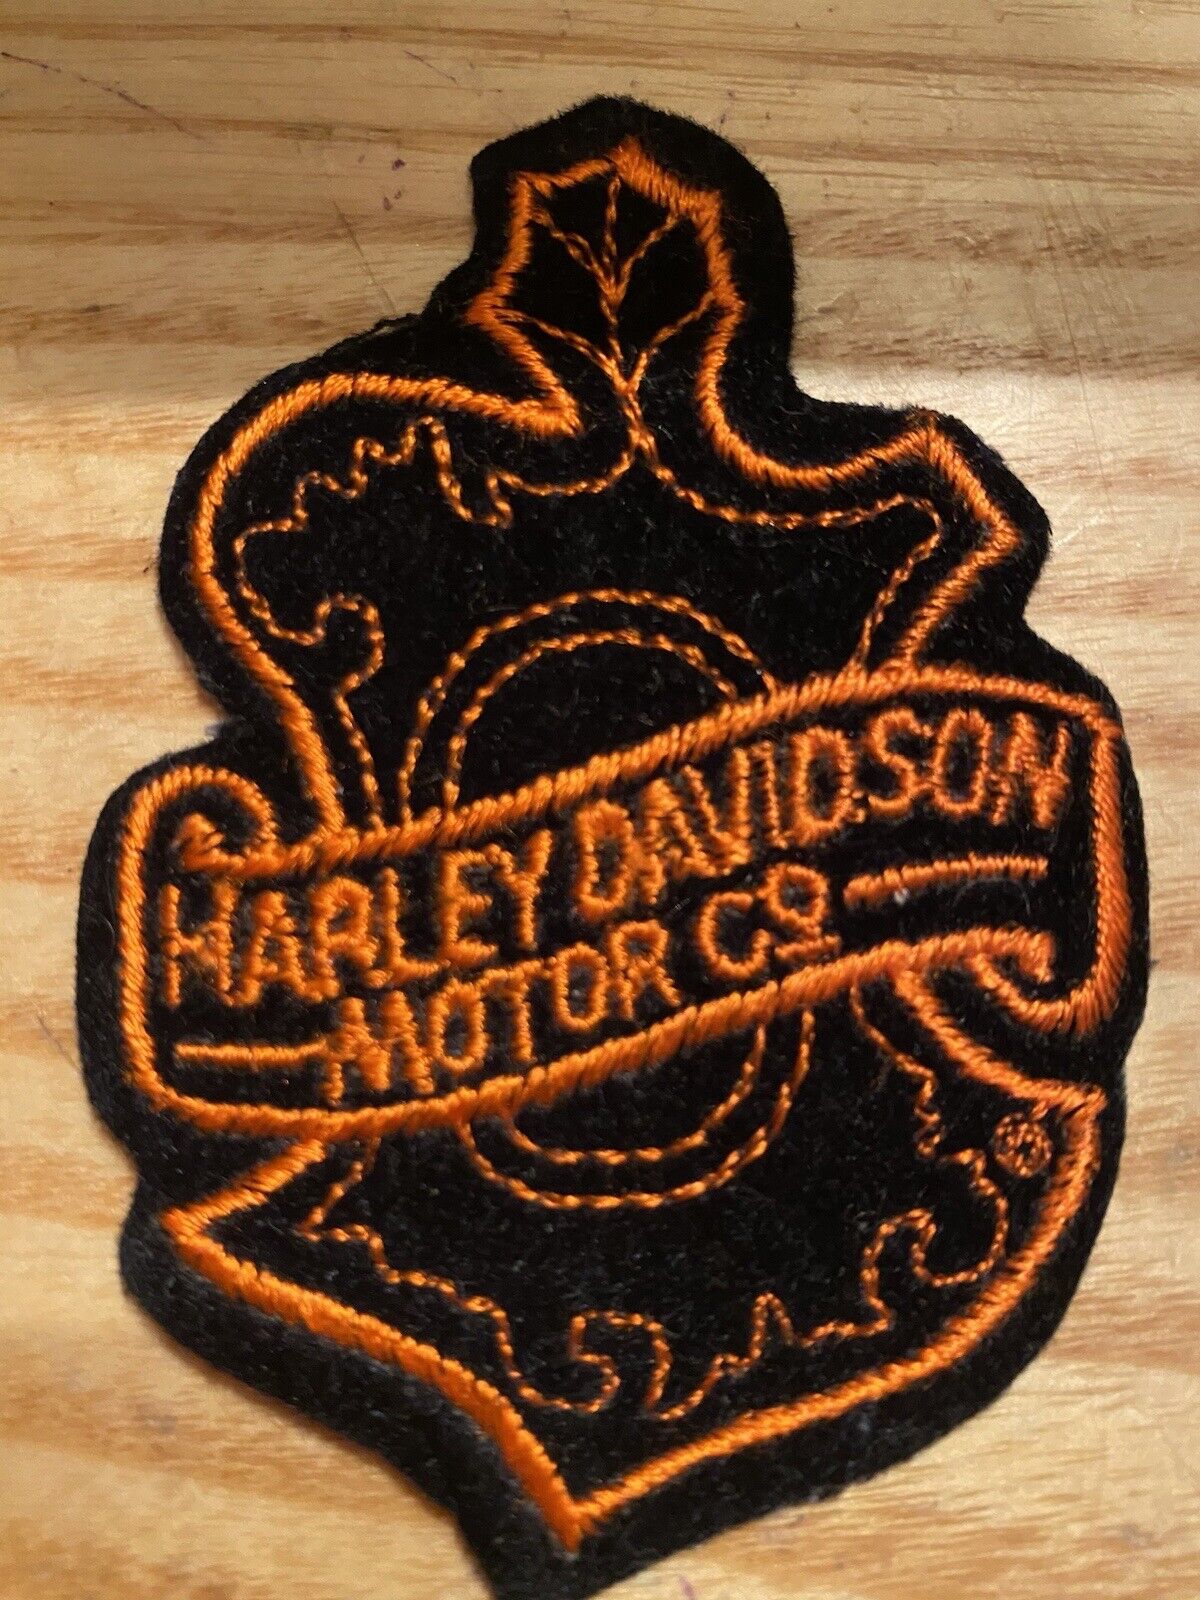 HARLEY DAVIDSON VINTAGE EMBROIDERED OAK LEAF SMALL PATCH 3”x 2 1/8” NEW